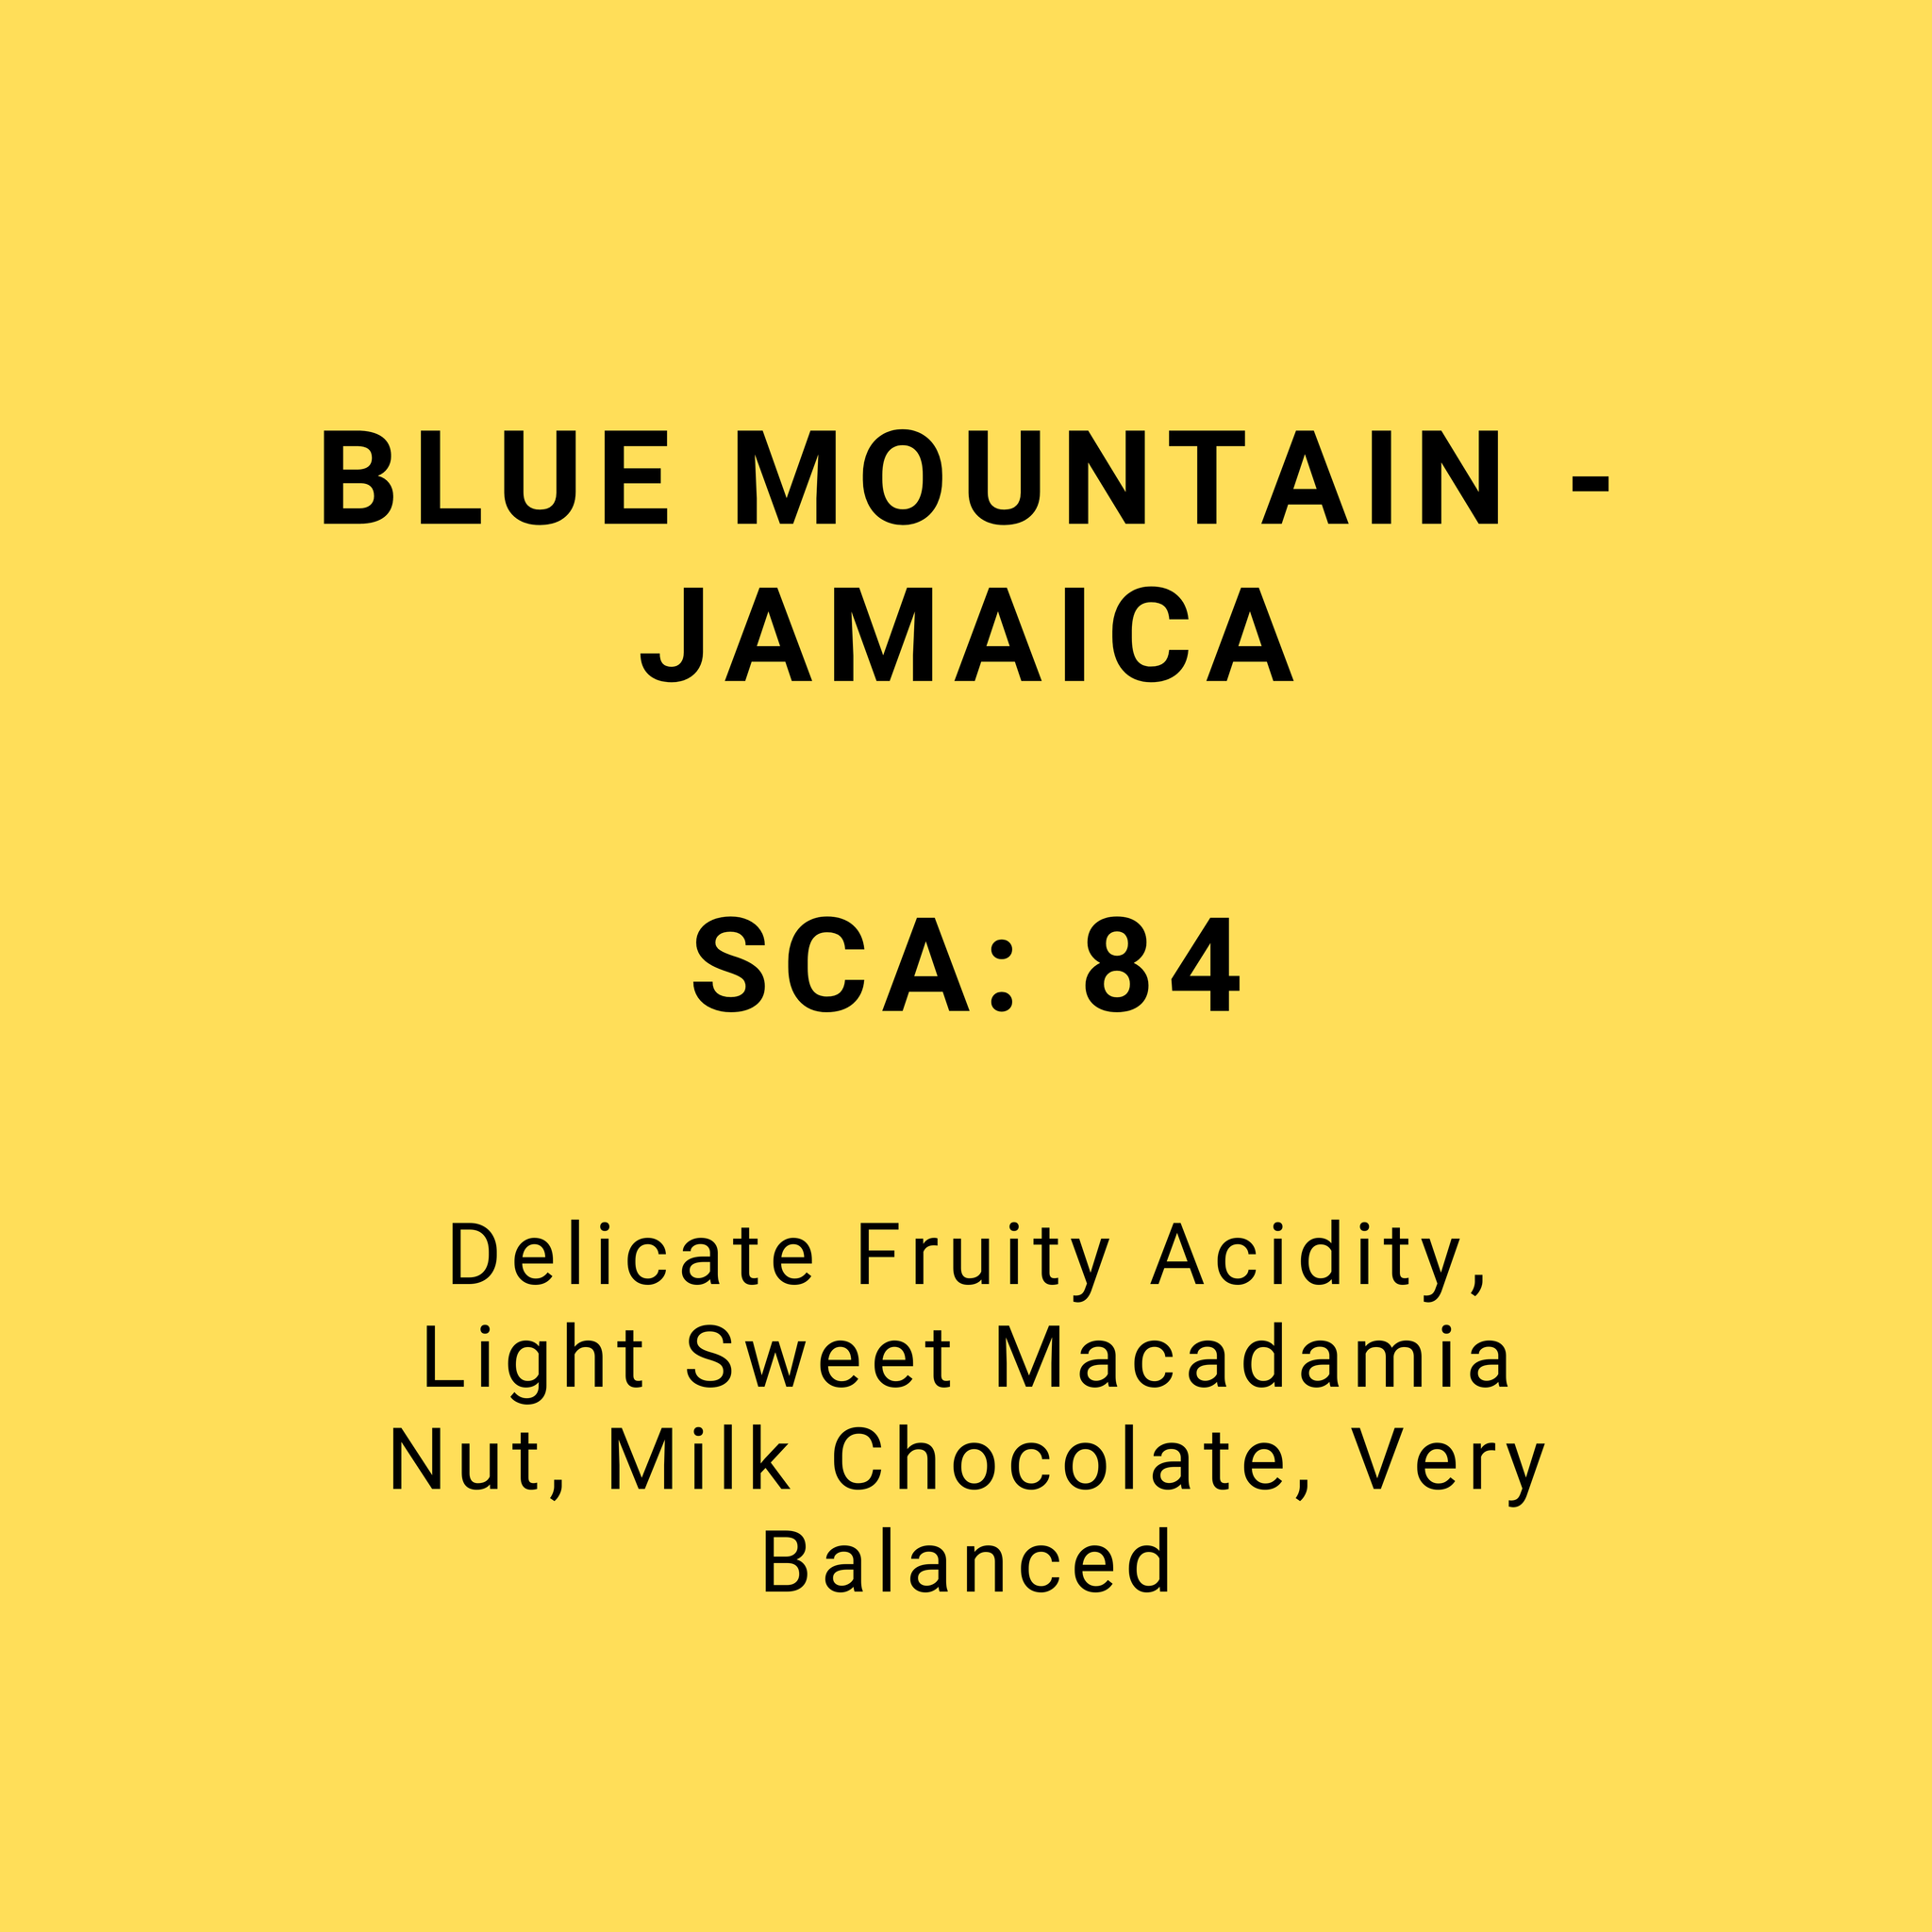 BLUE MOUNTAIN - JAMAICA